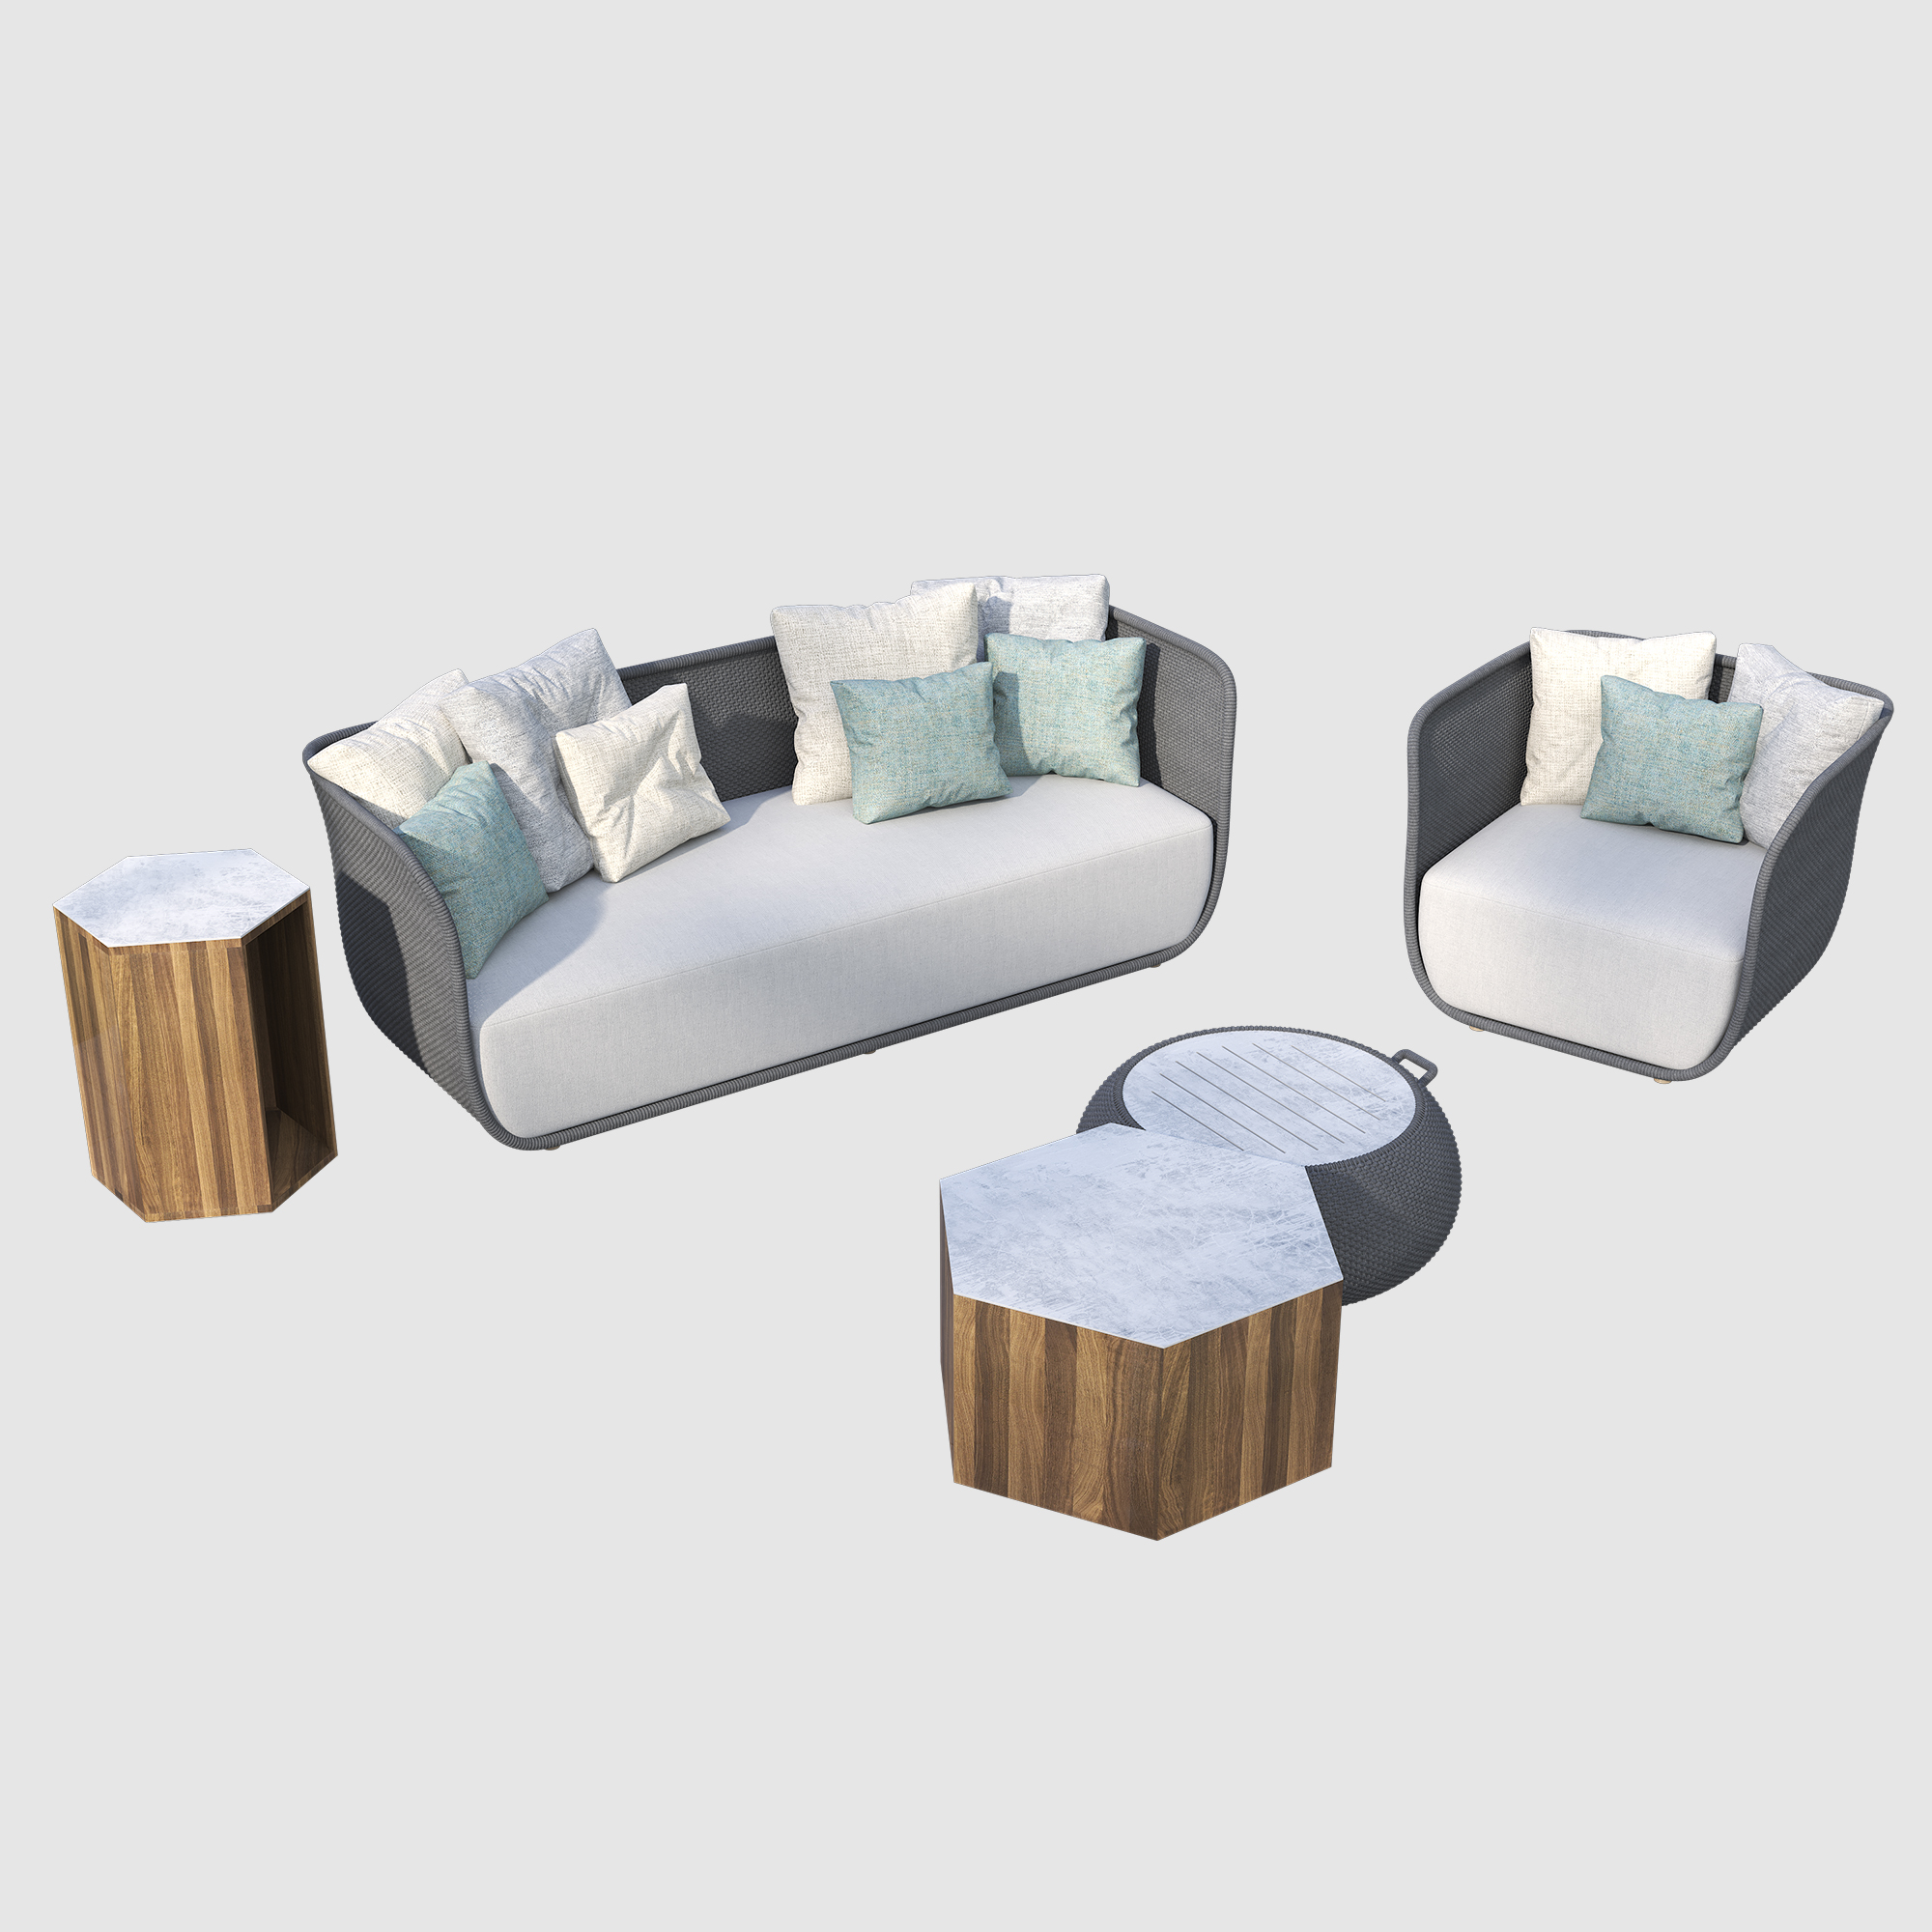 Paling laris Patio Sets Taman Waterproof Set Furniture Outdoor Sofa